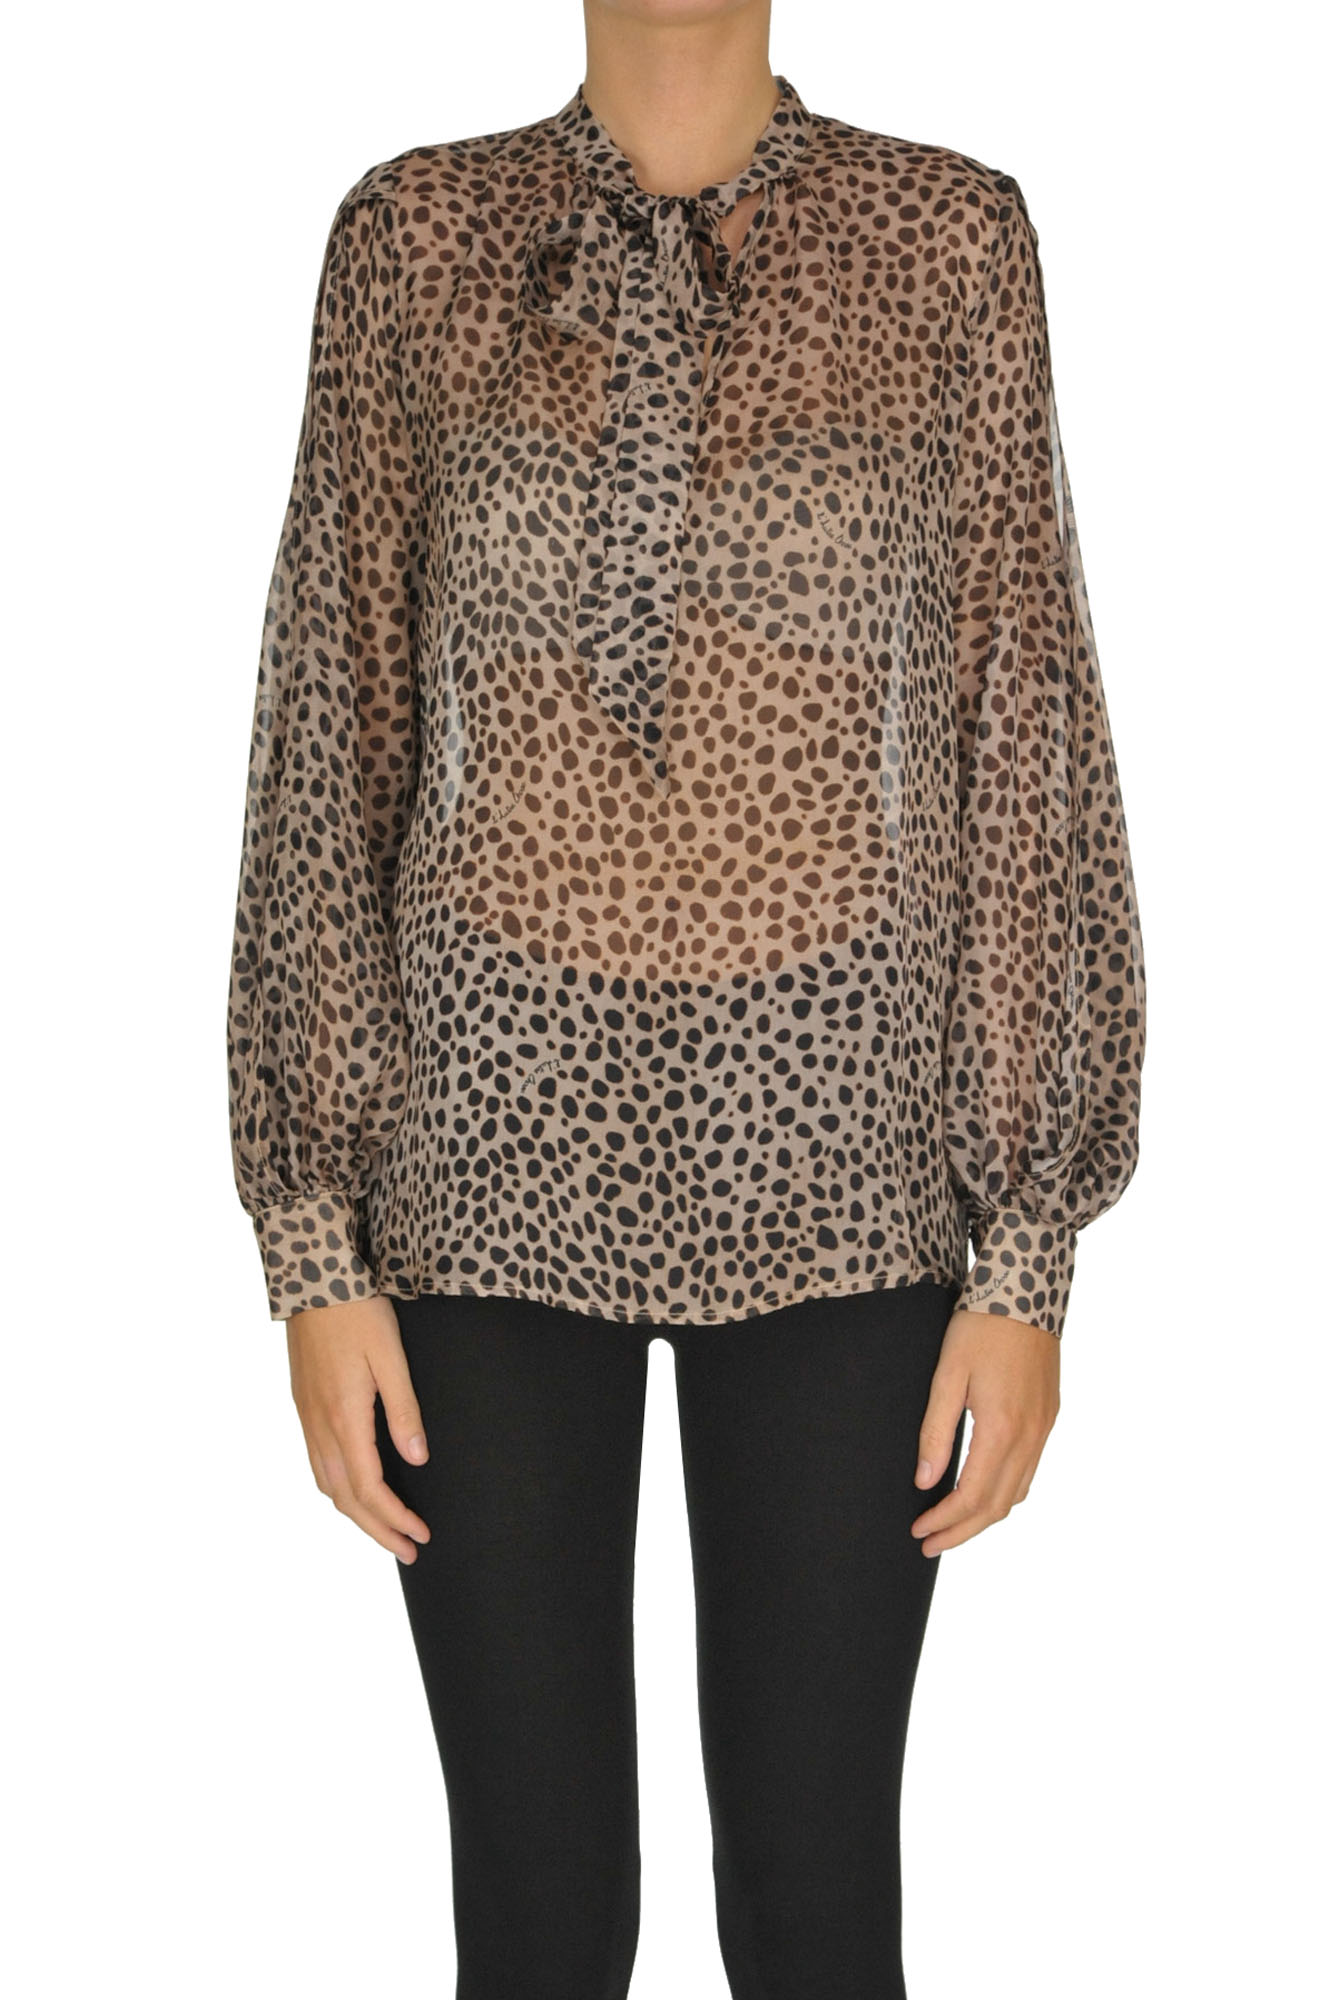 L'Autre Chose Animal print silk blouse - Buy online on Glamest Fashion ...